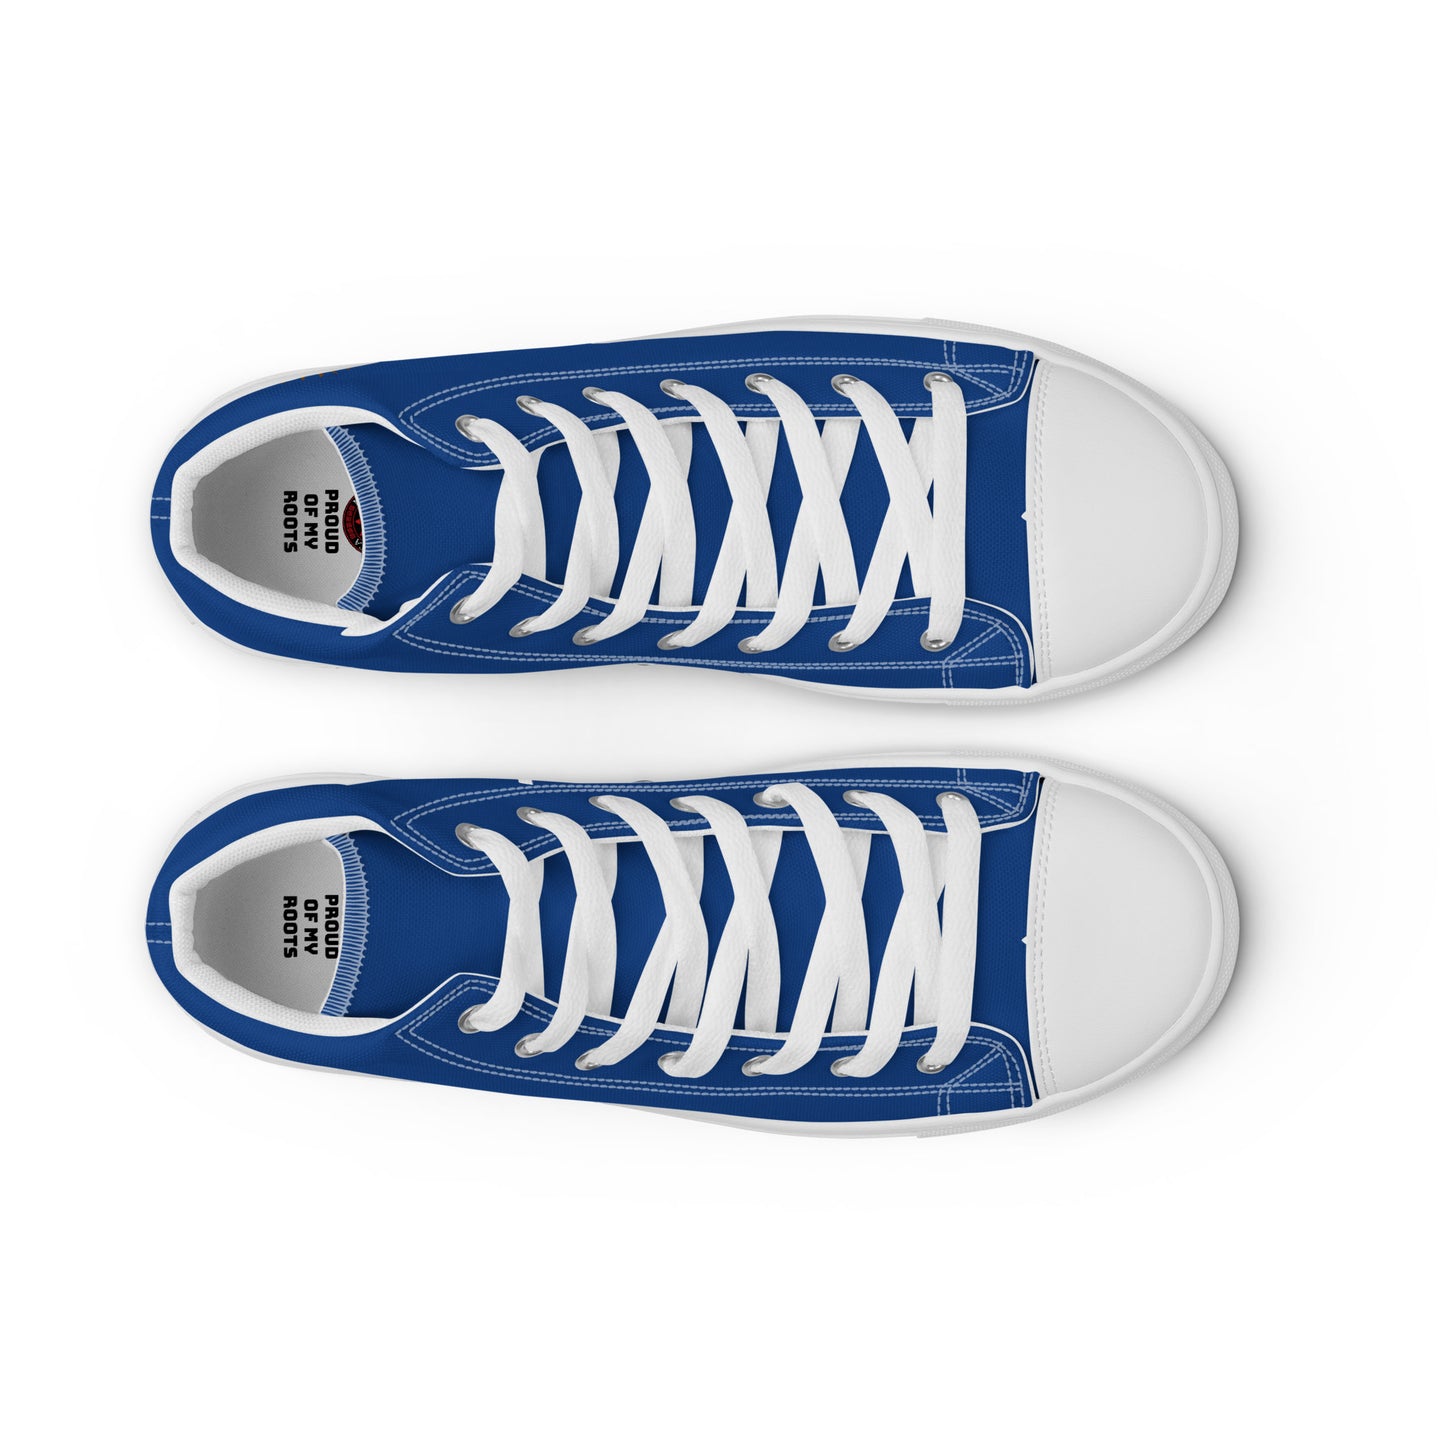 Uruguay - Men - Blue - High top shoes